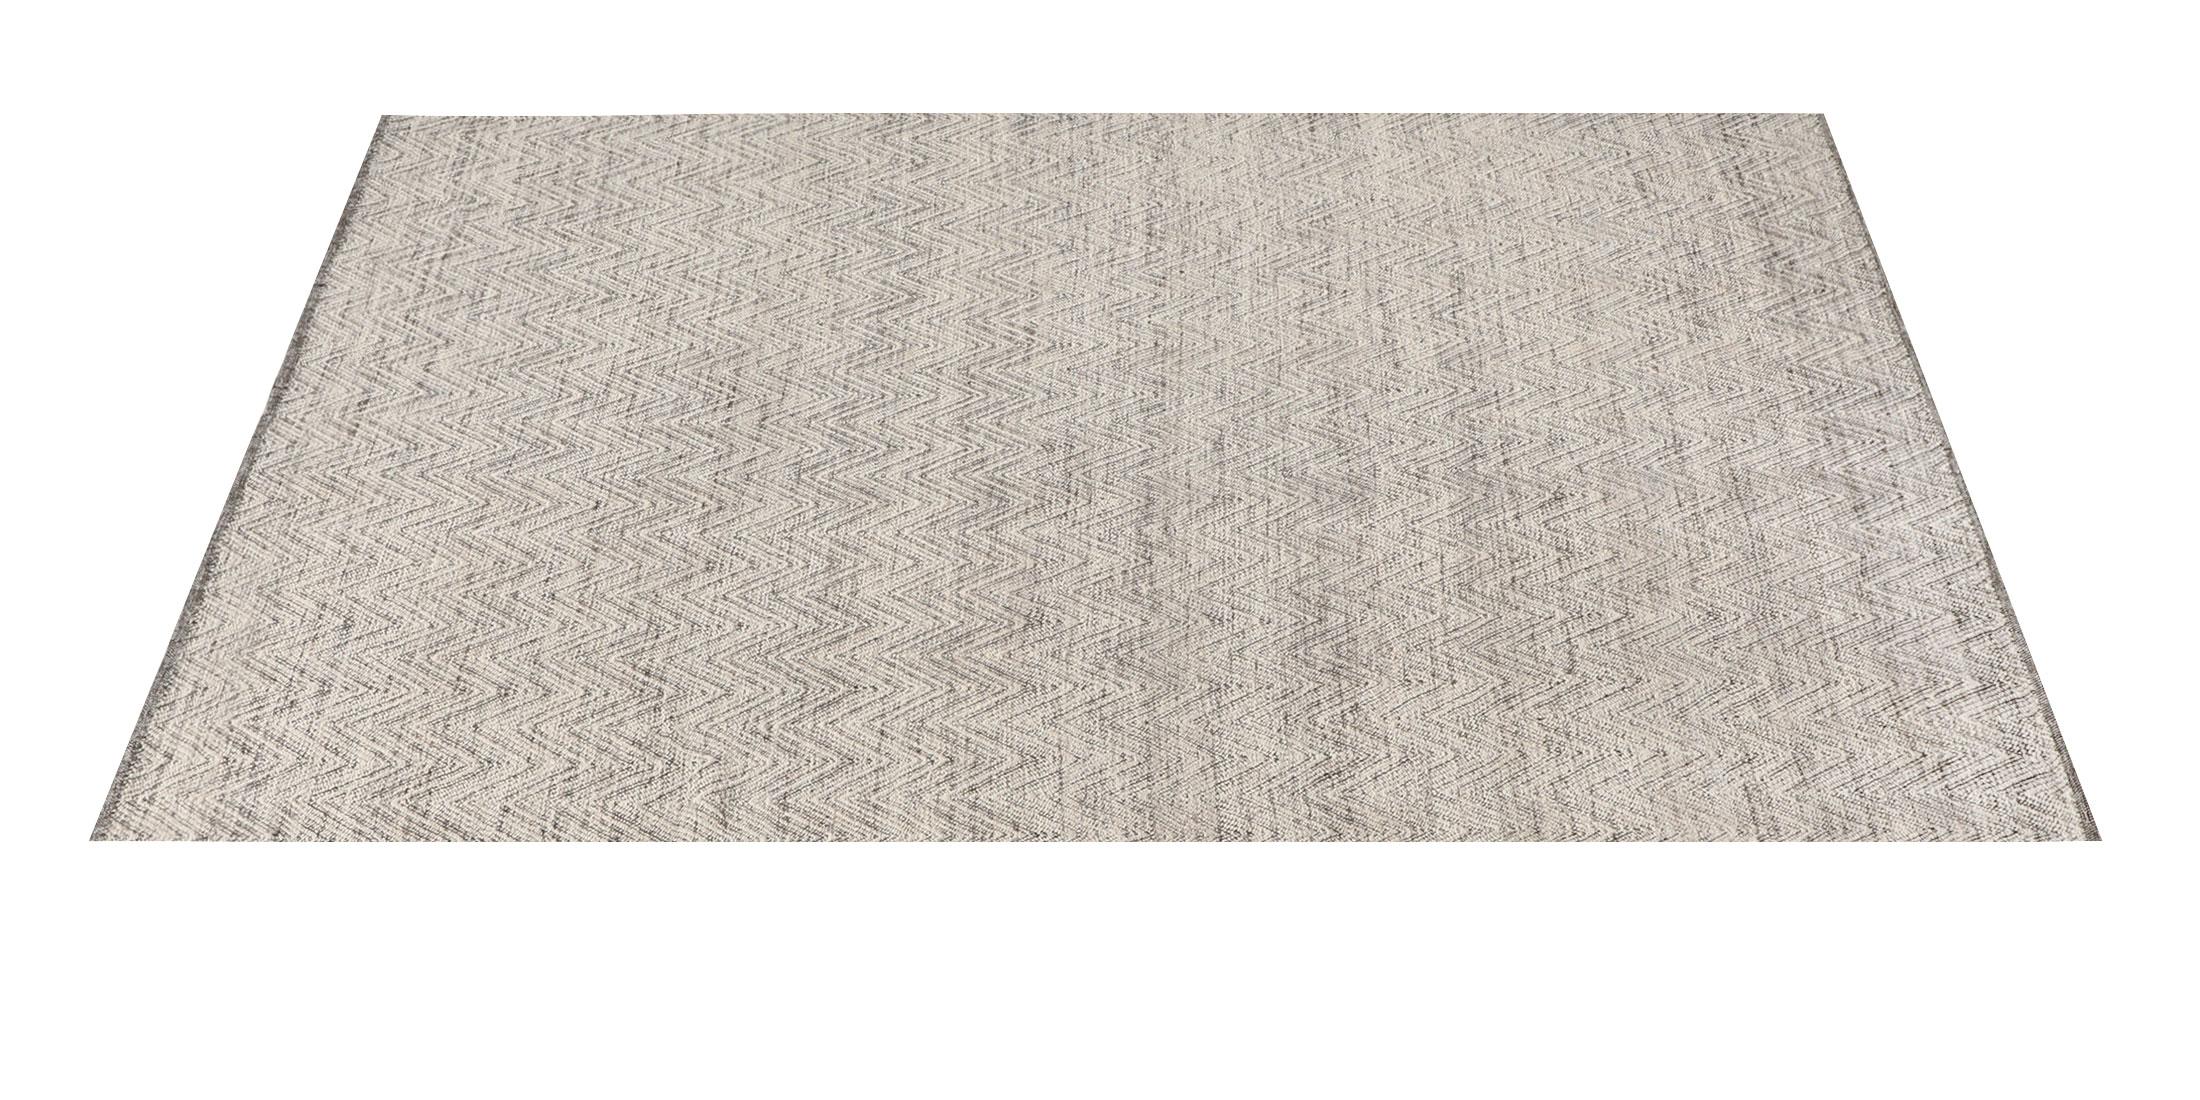 For Sale: Silver Ben Soleimani Ceyah Rug– Hand-woven Plush Textured Wool + Linen Charcoal 8'x10' 2